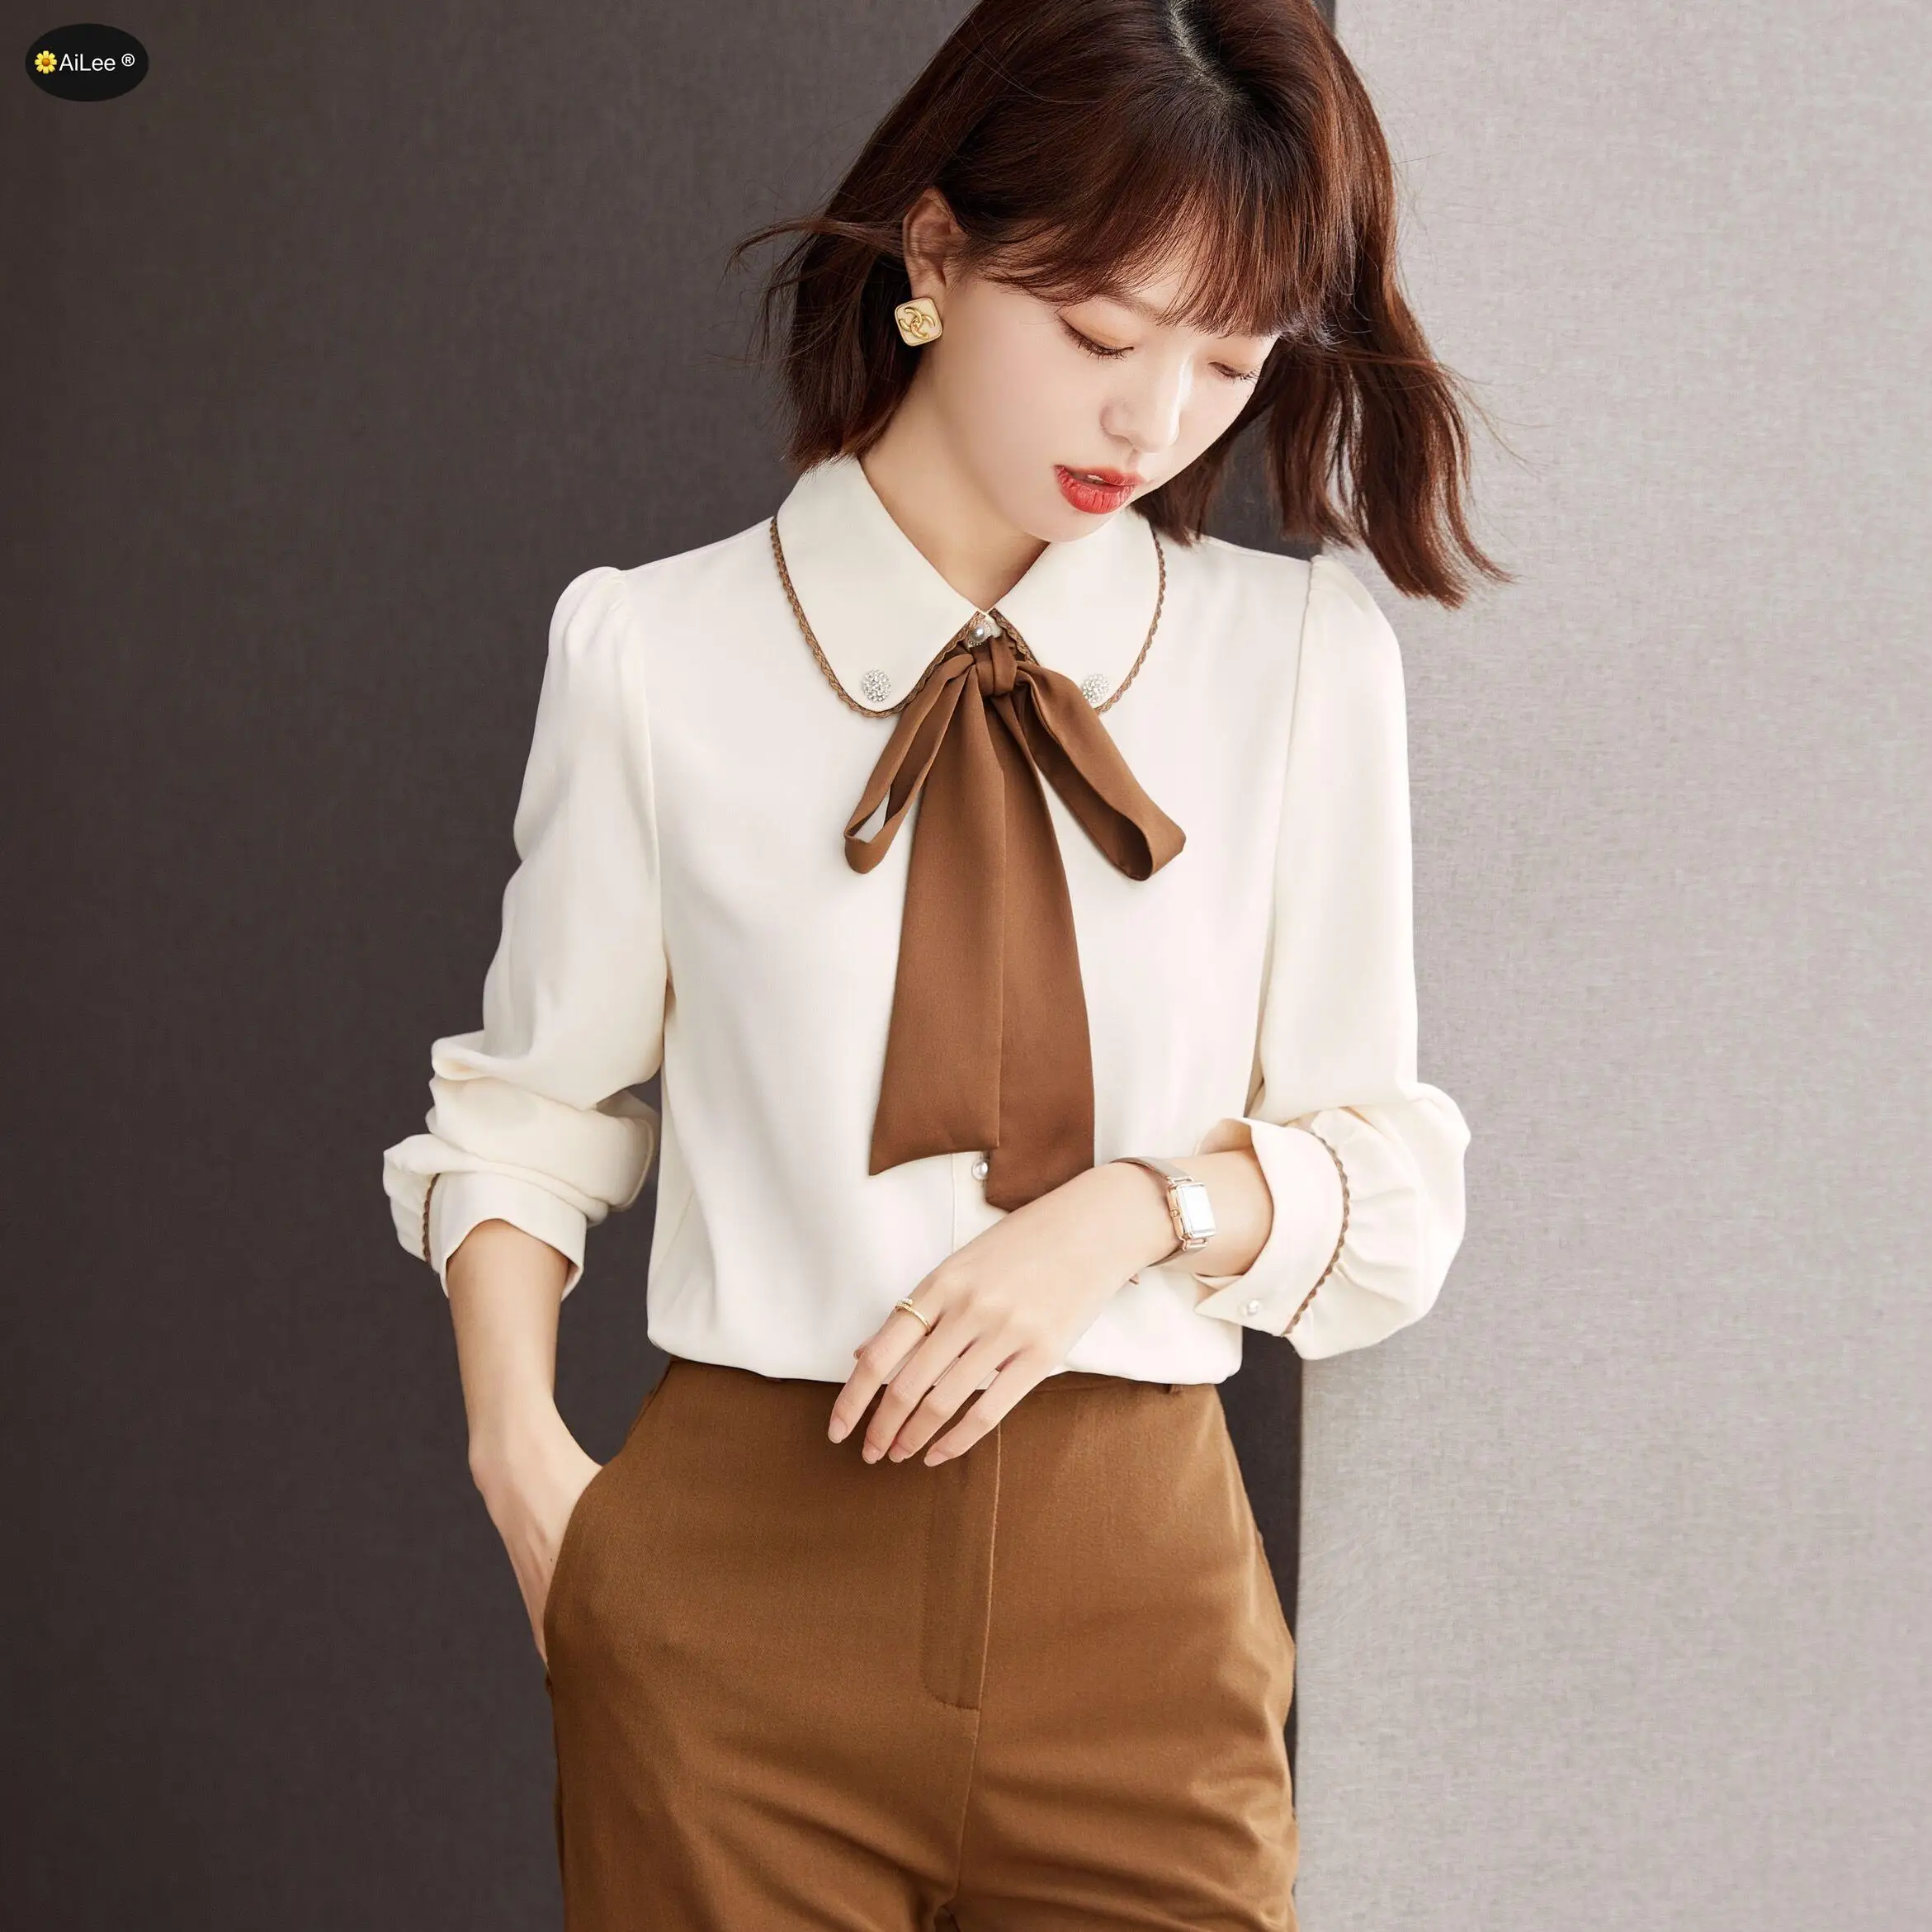 

Peter Pan Collar Ribbon Blouse Sweet Lolita Women Chic Fashion Casual Tops Streetwear Office Work Business Korea Style Shirts